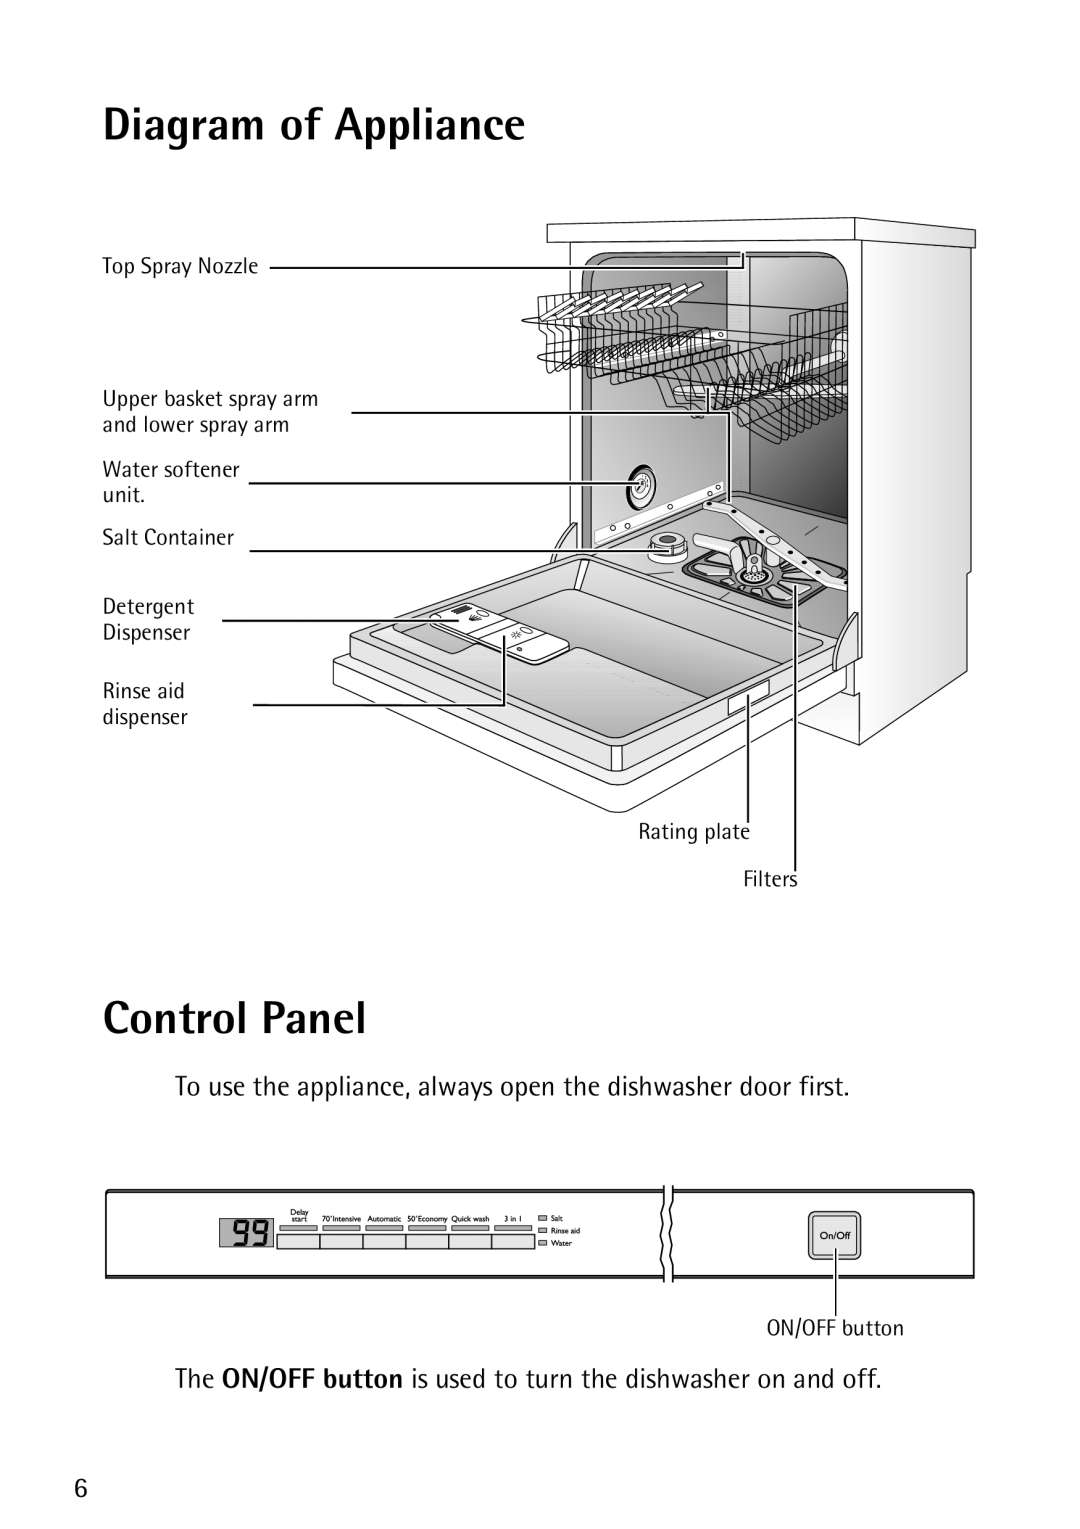 John Lewis JLDWS1202 instruction manual Diagram of Appliance, Control Panel 